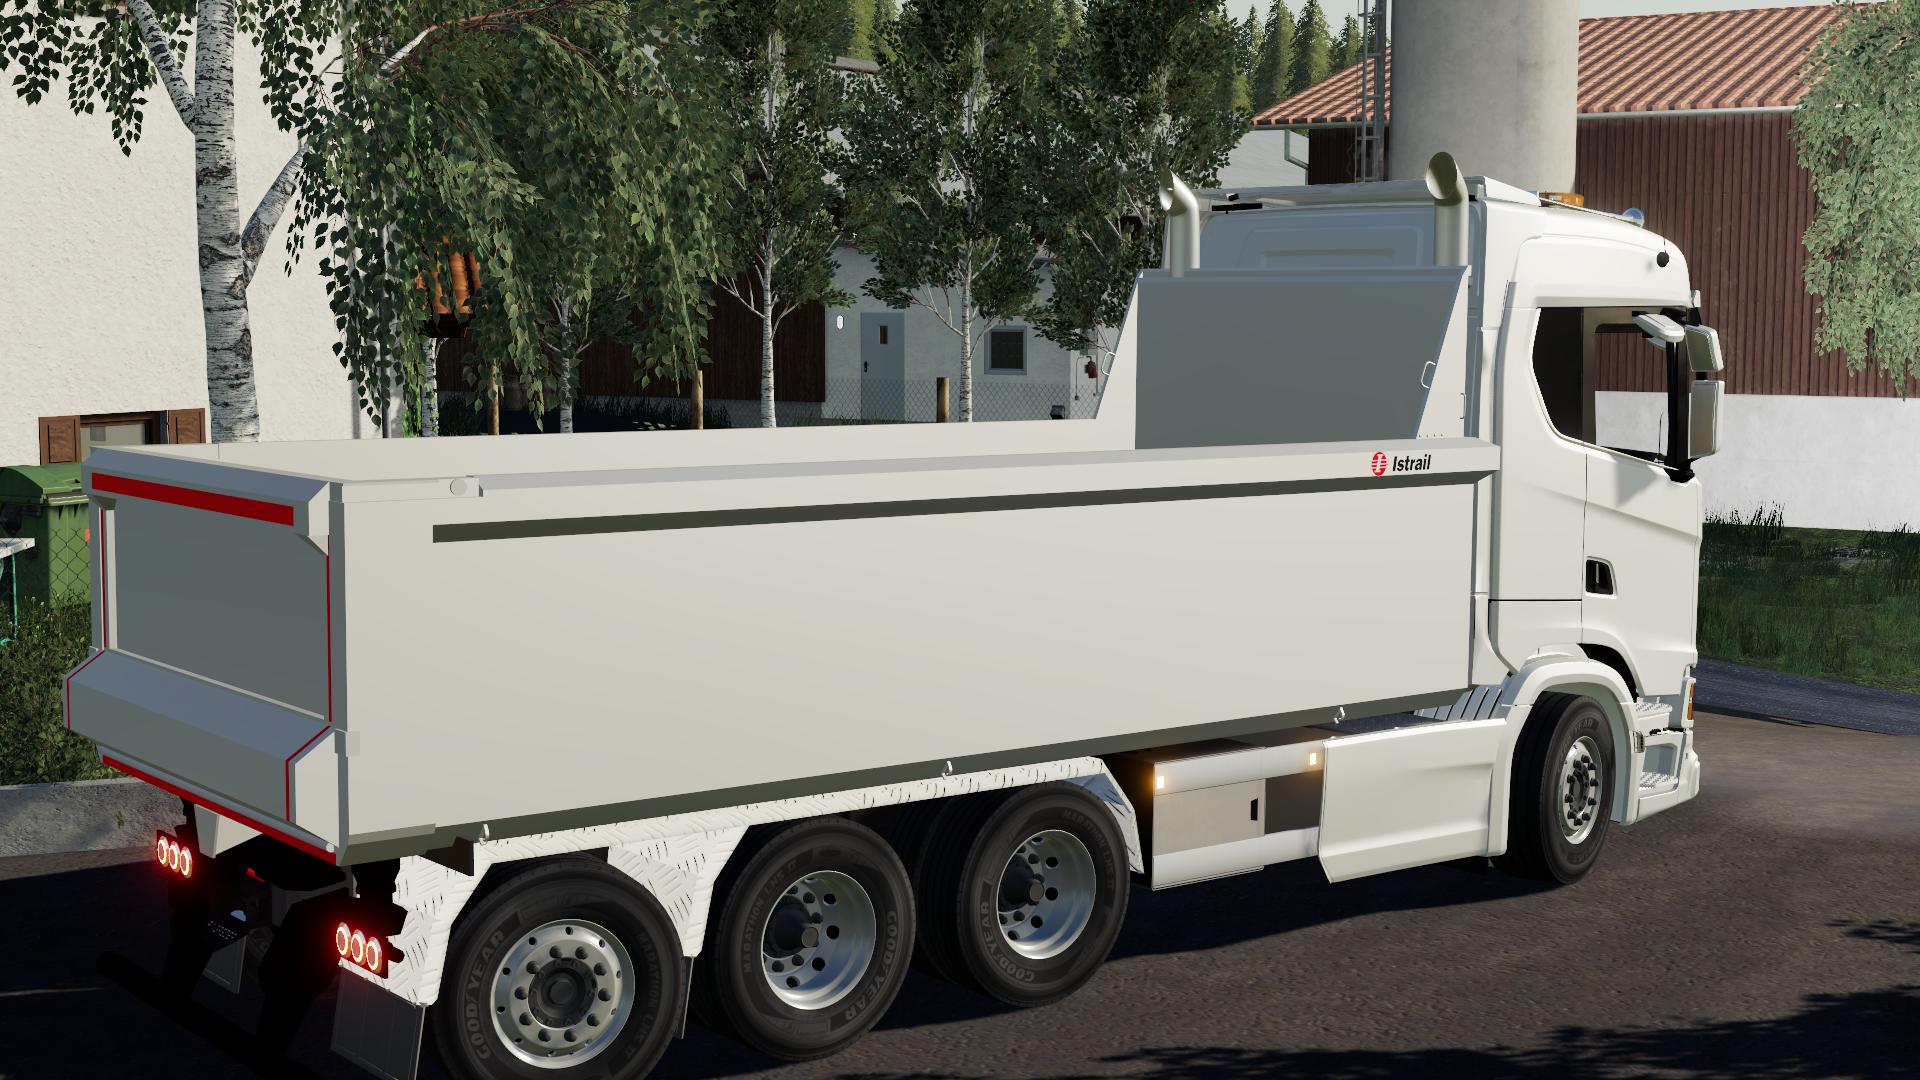 Scania S730 Hkl Tipper V10 Fs 19 Farming Simulator 22 Mod Ls22 Mod Download 6400